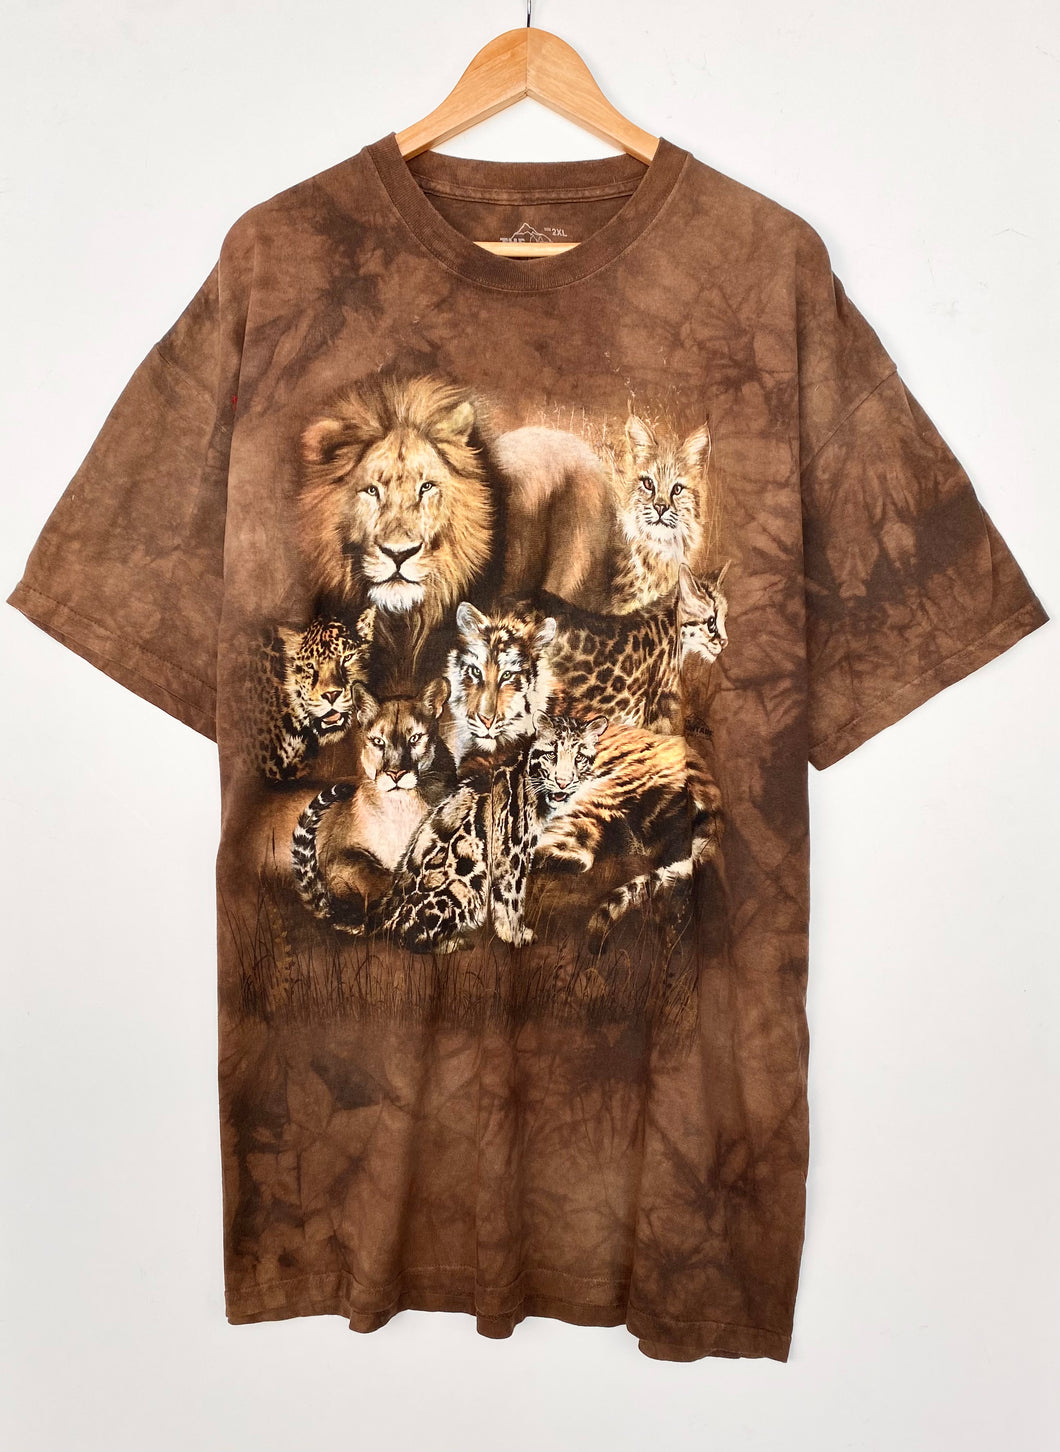 Big Cat Tie-Dye t-shirt (2XL)